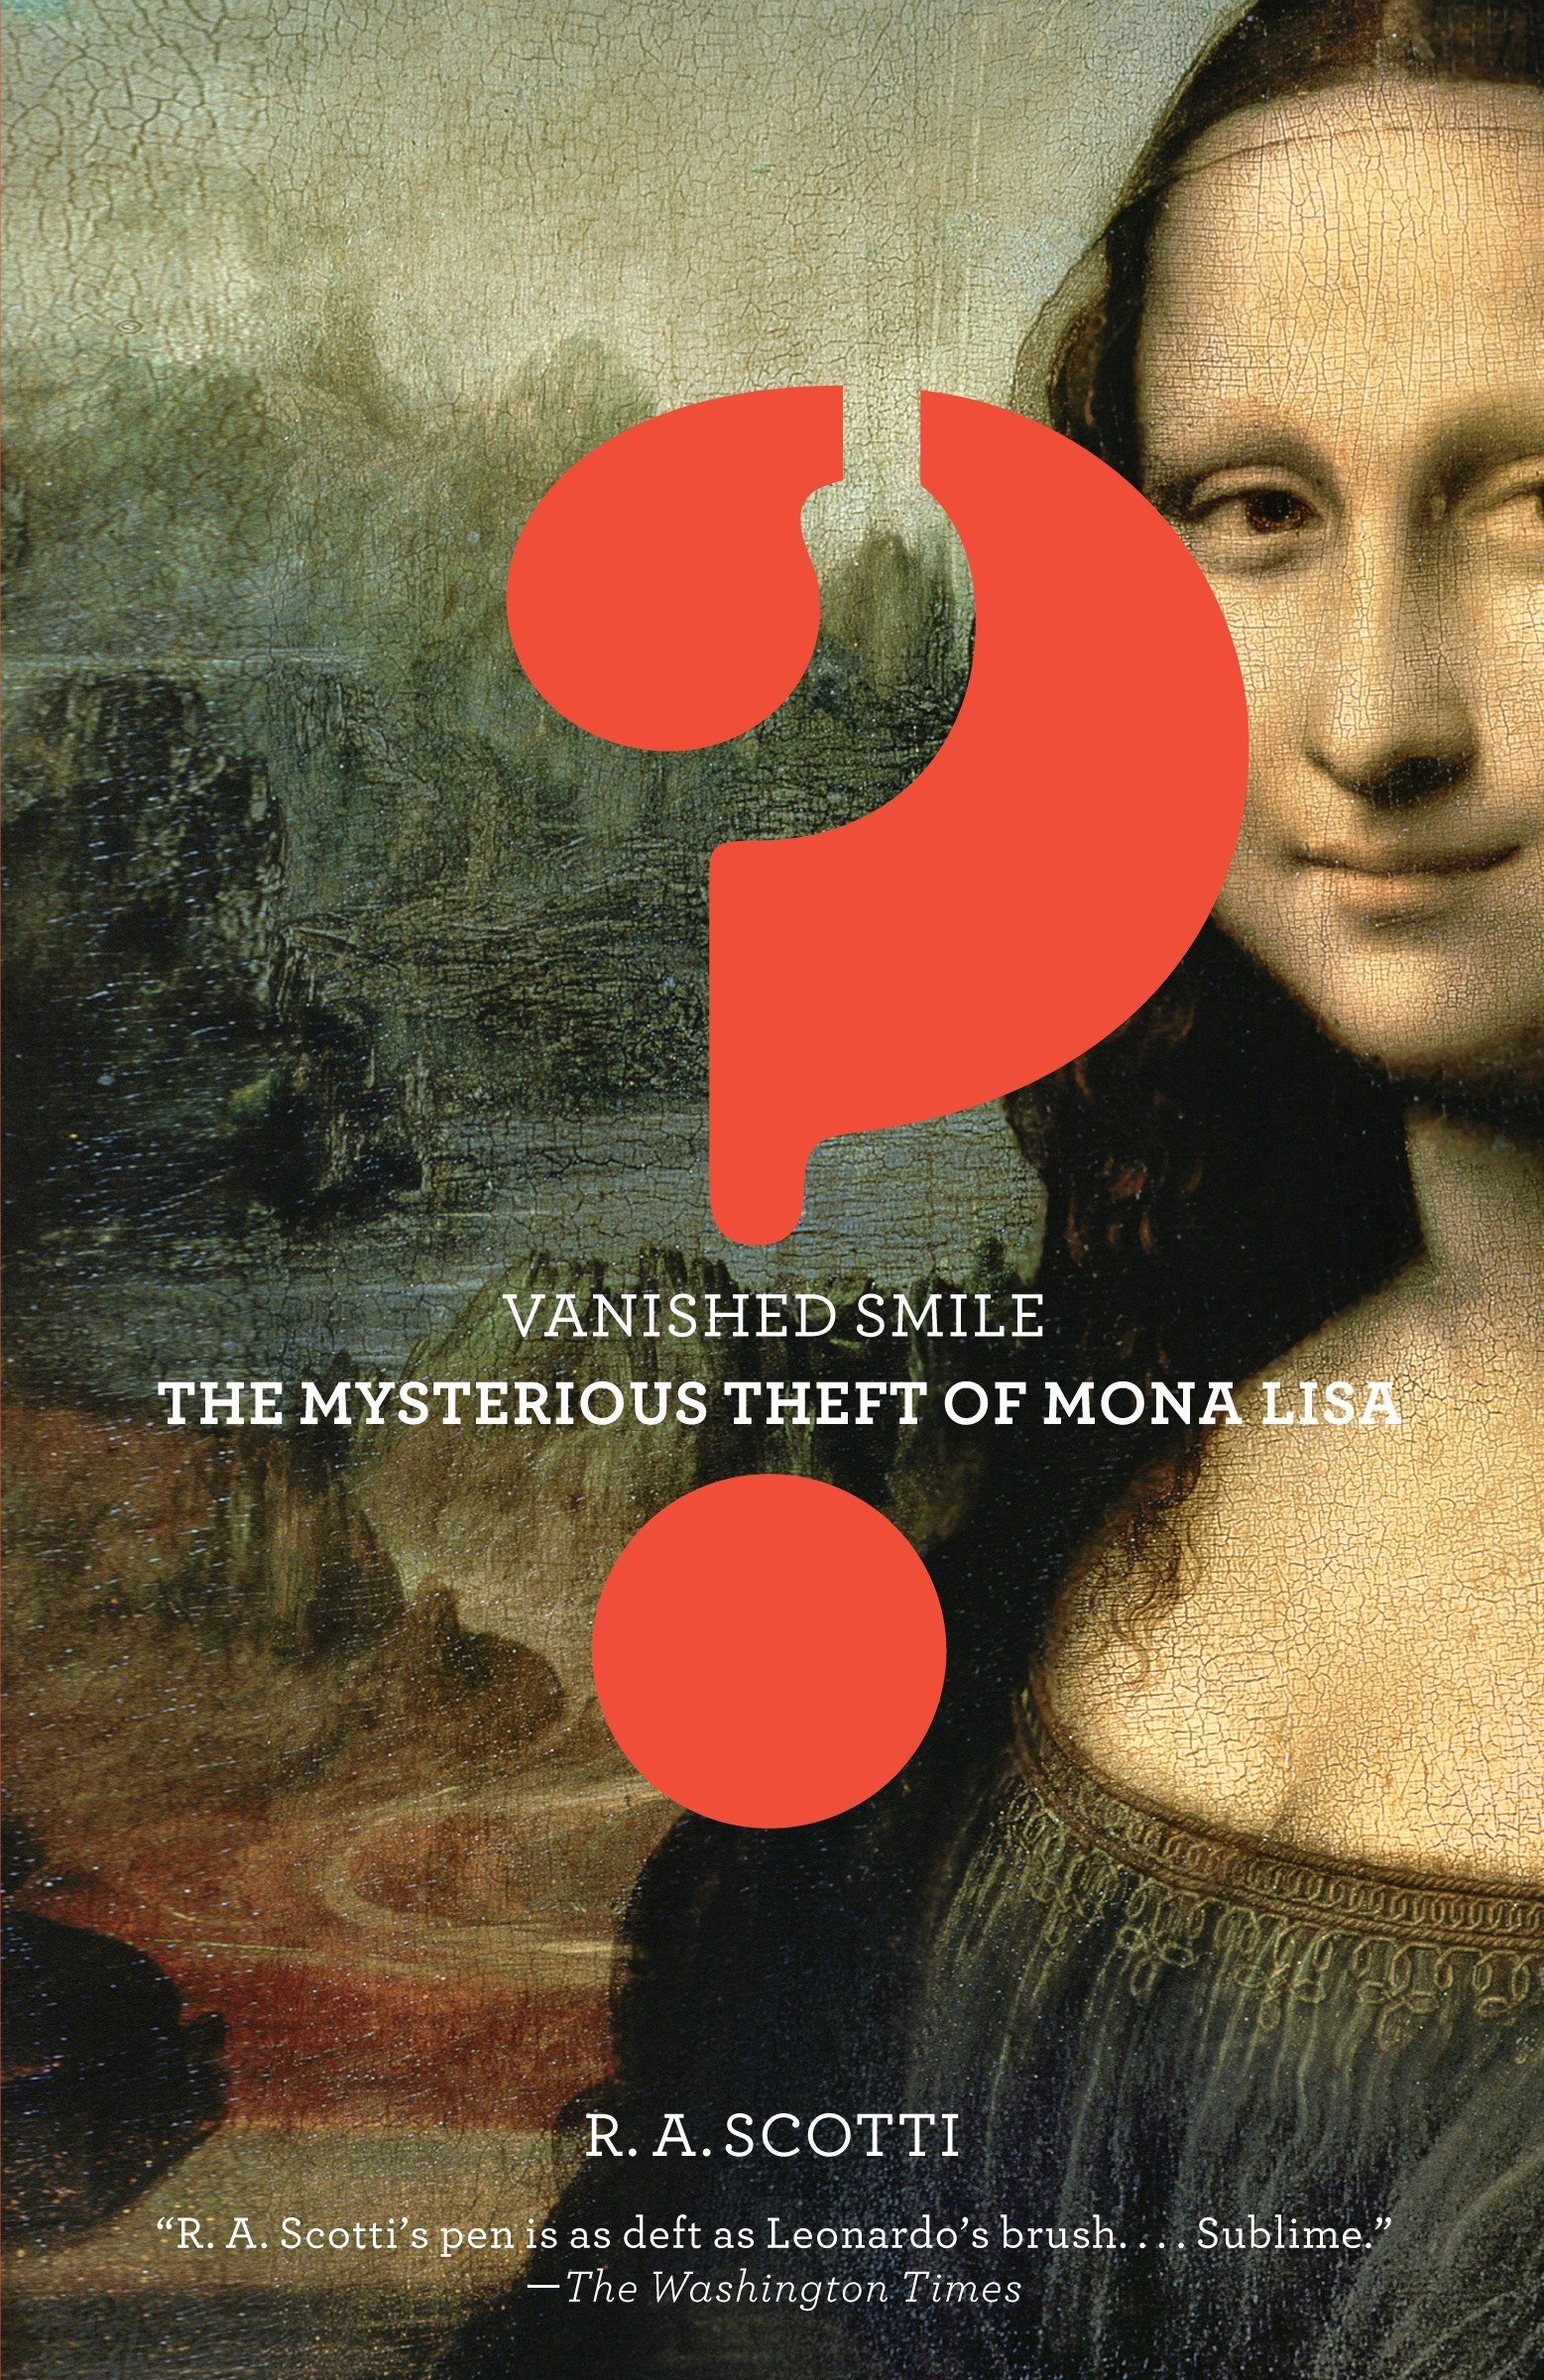 英文原版 消失的微笑:蒙娜丽莎的神秘失窃 插图版 Vanished Smile: The Mysterious Theft of the Mona Lisa